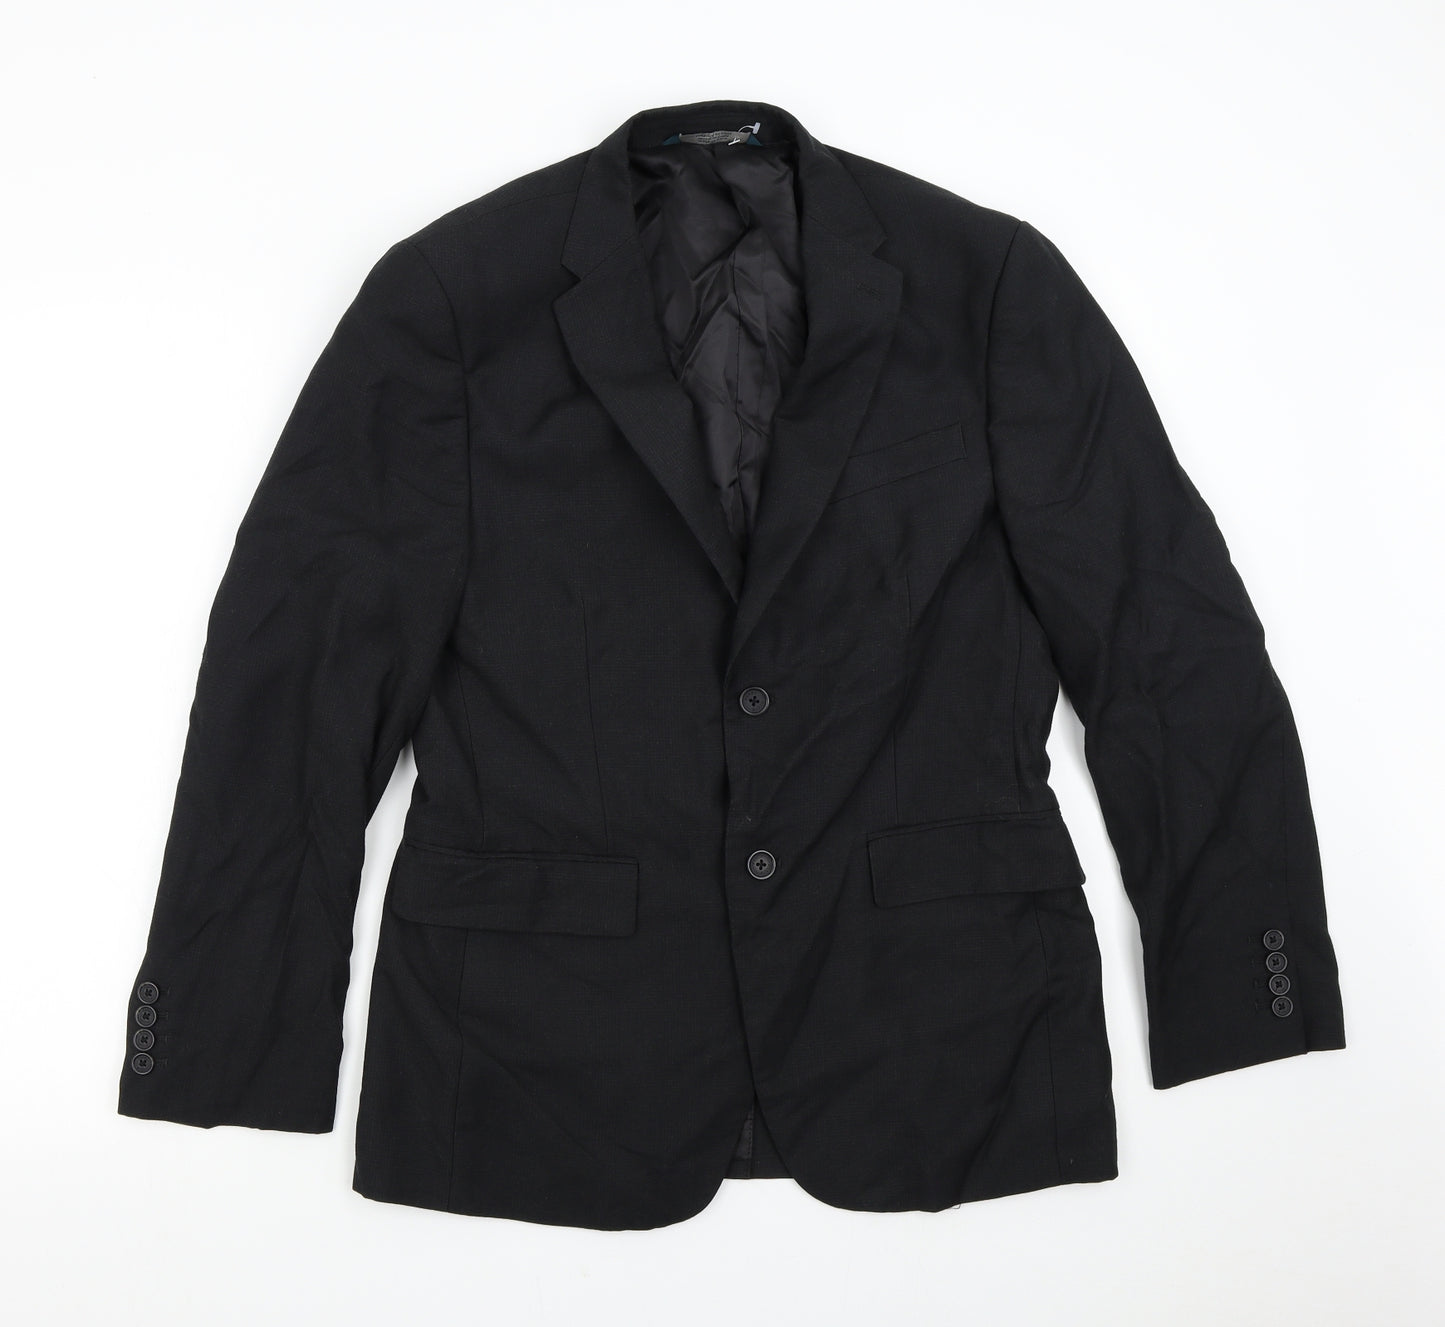 Perry Ellis Mens Black   Jacket Suit Jacket Size 38